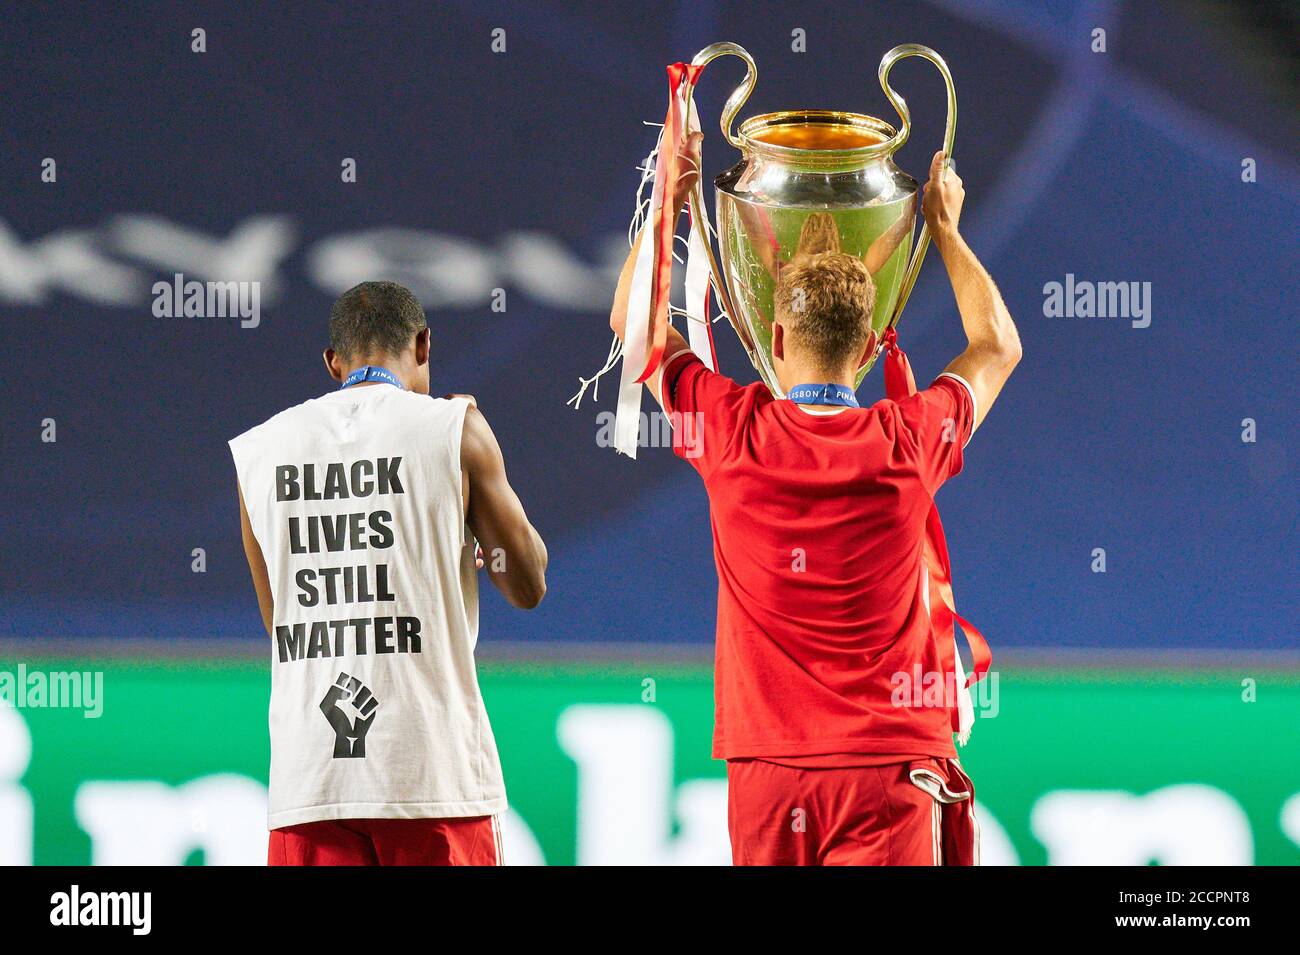 Lisbon, Lissabon, Portugal, 23rd August 2020. David ALABA, FCB with t- shirt Black Lives still matter, Politik, gegen Rassismus, Meinung, Joshua KIMMICH, FCB 32 team FCB win the trophy final